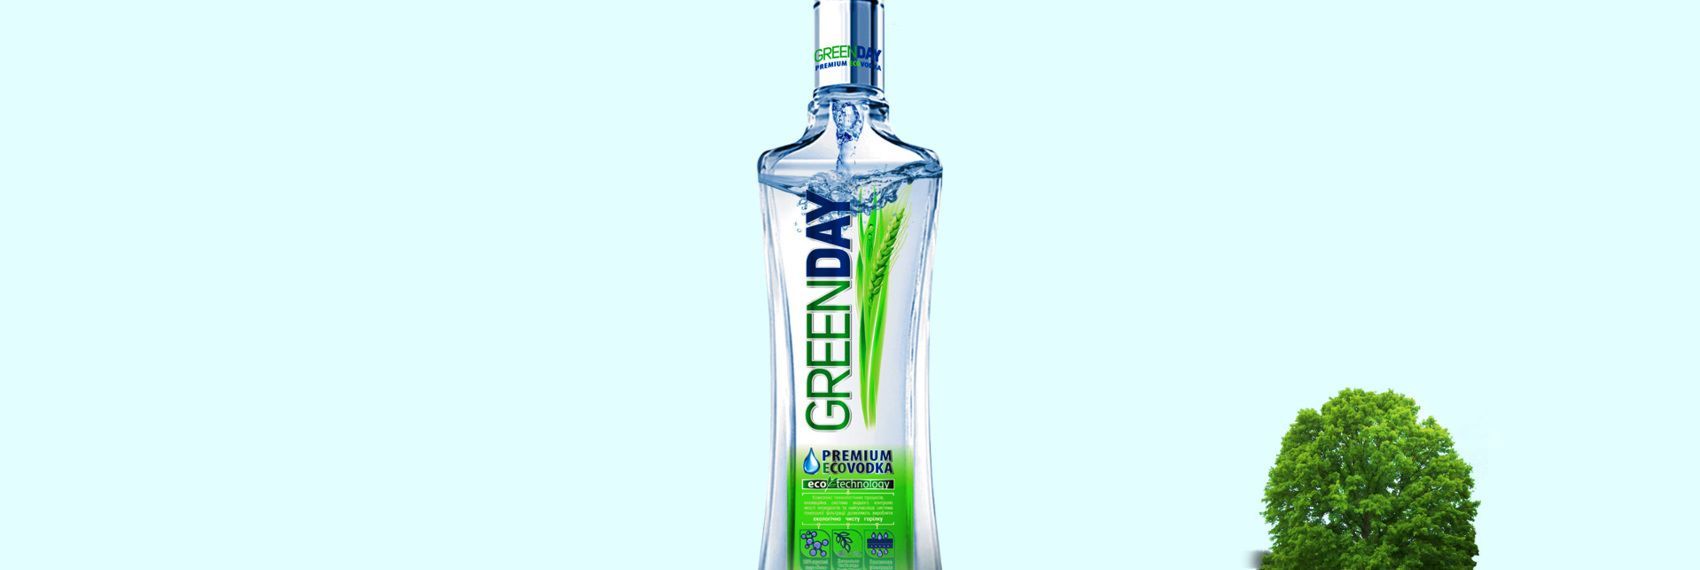 Promotional website for Green Day Vodka